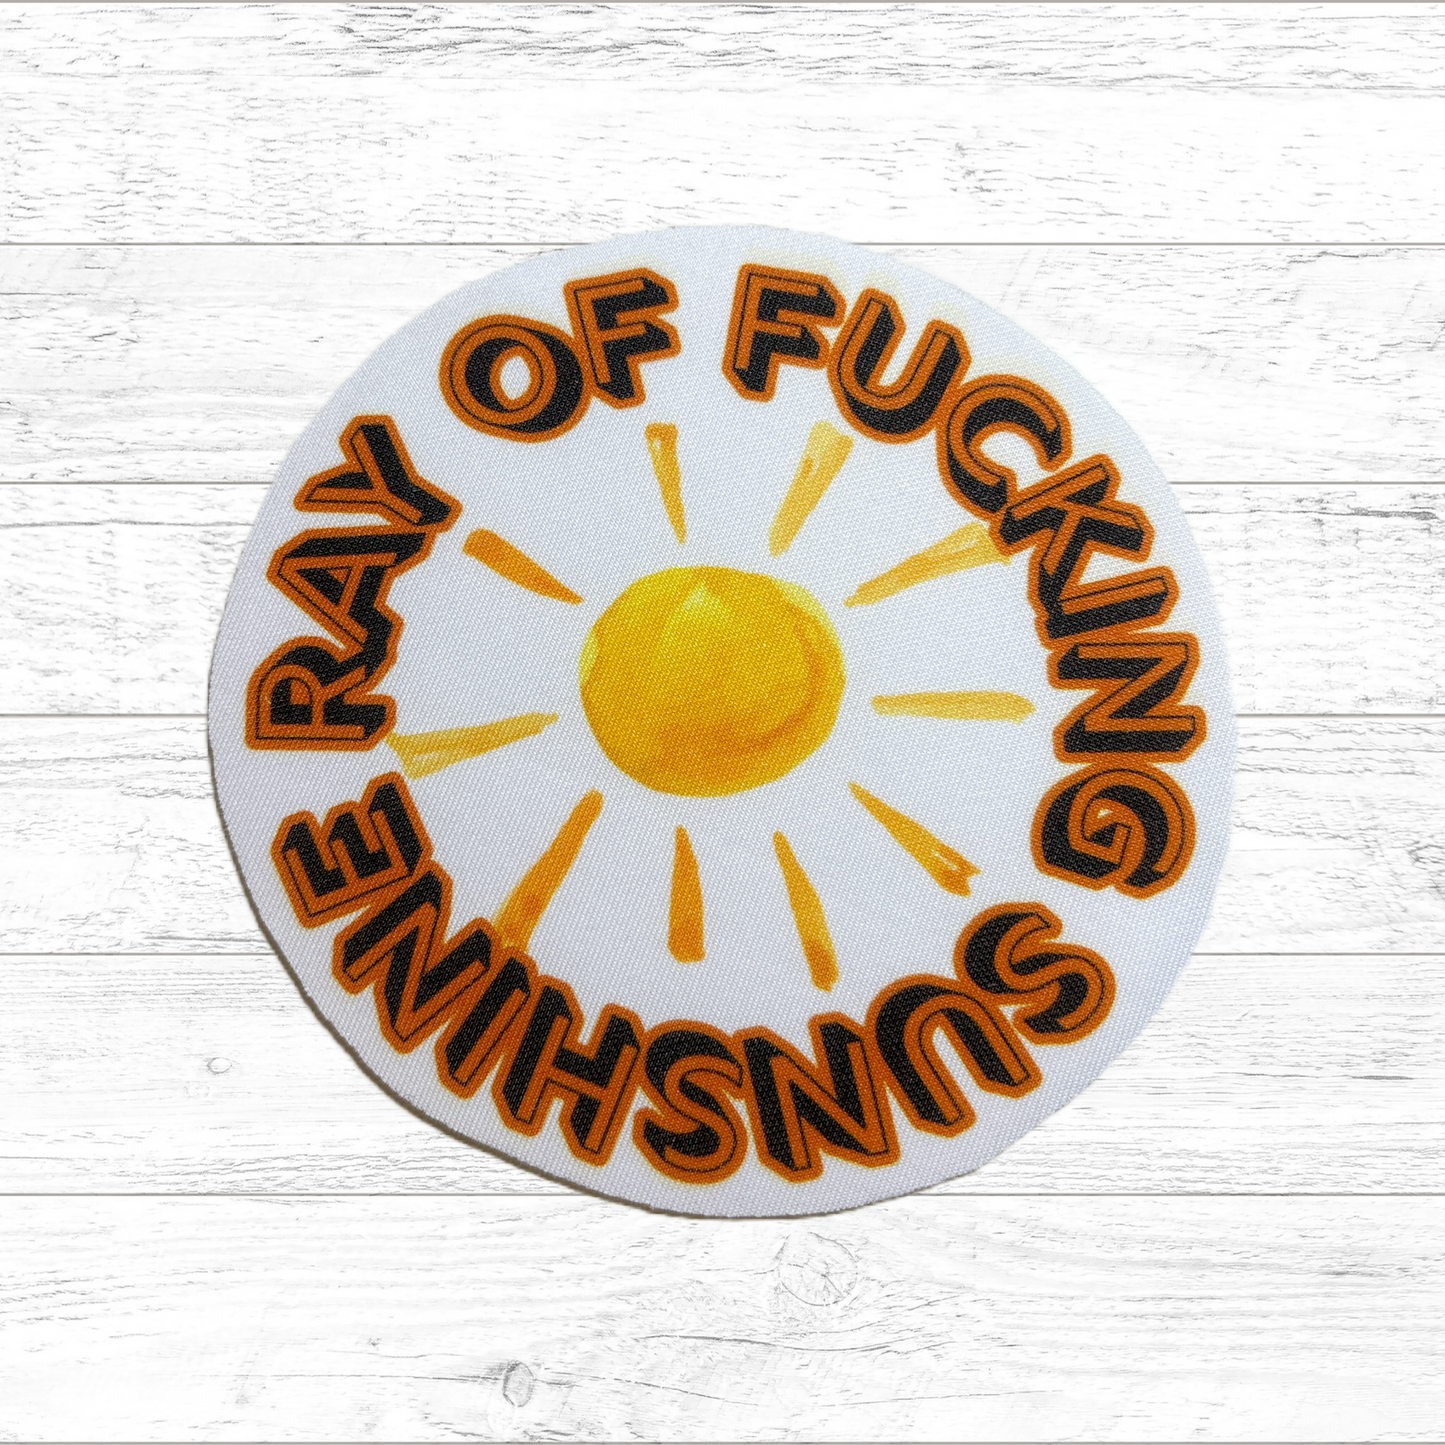 Ray of fucking sunshine - Sublimated Neoprene Patch